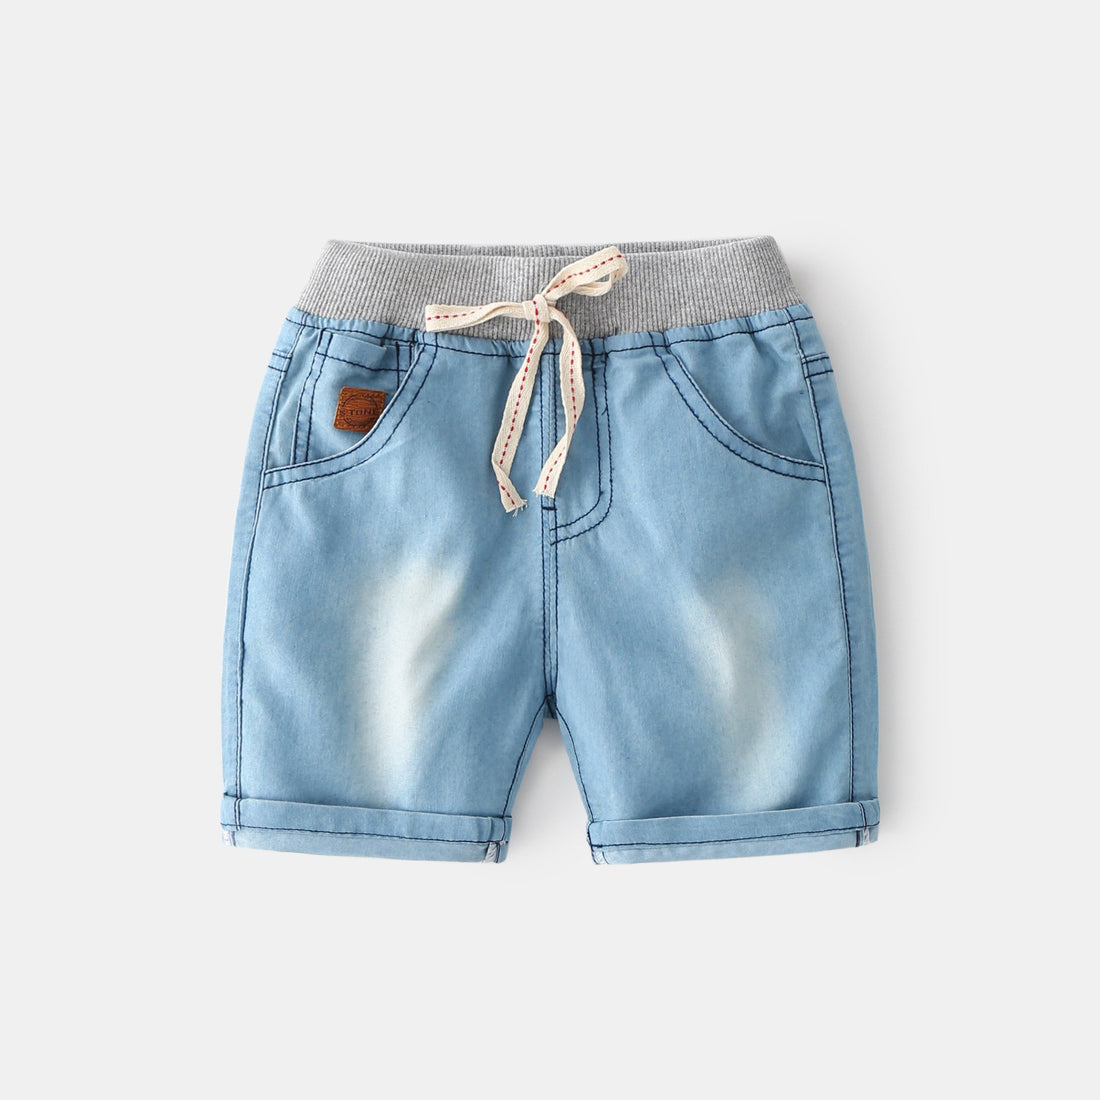 [513376] - Bawahan Pendek / Celana Jeans Anak Import - Motif Pouch Sign